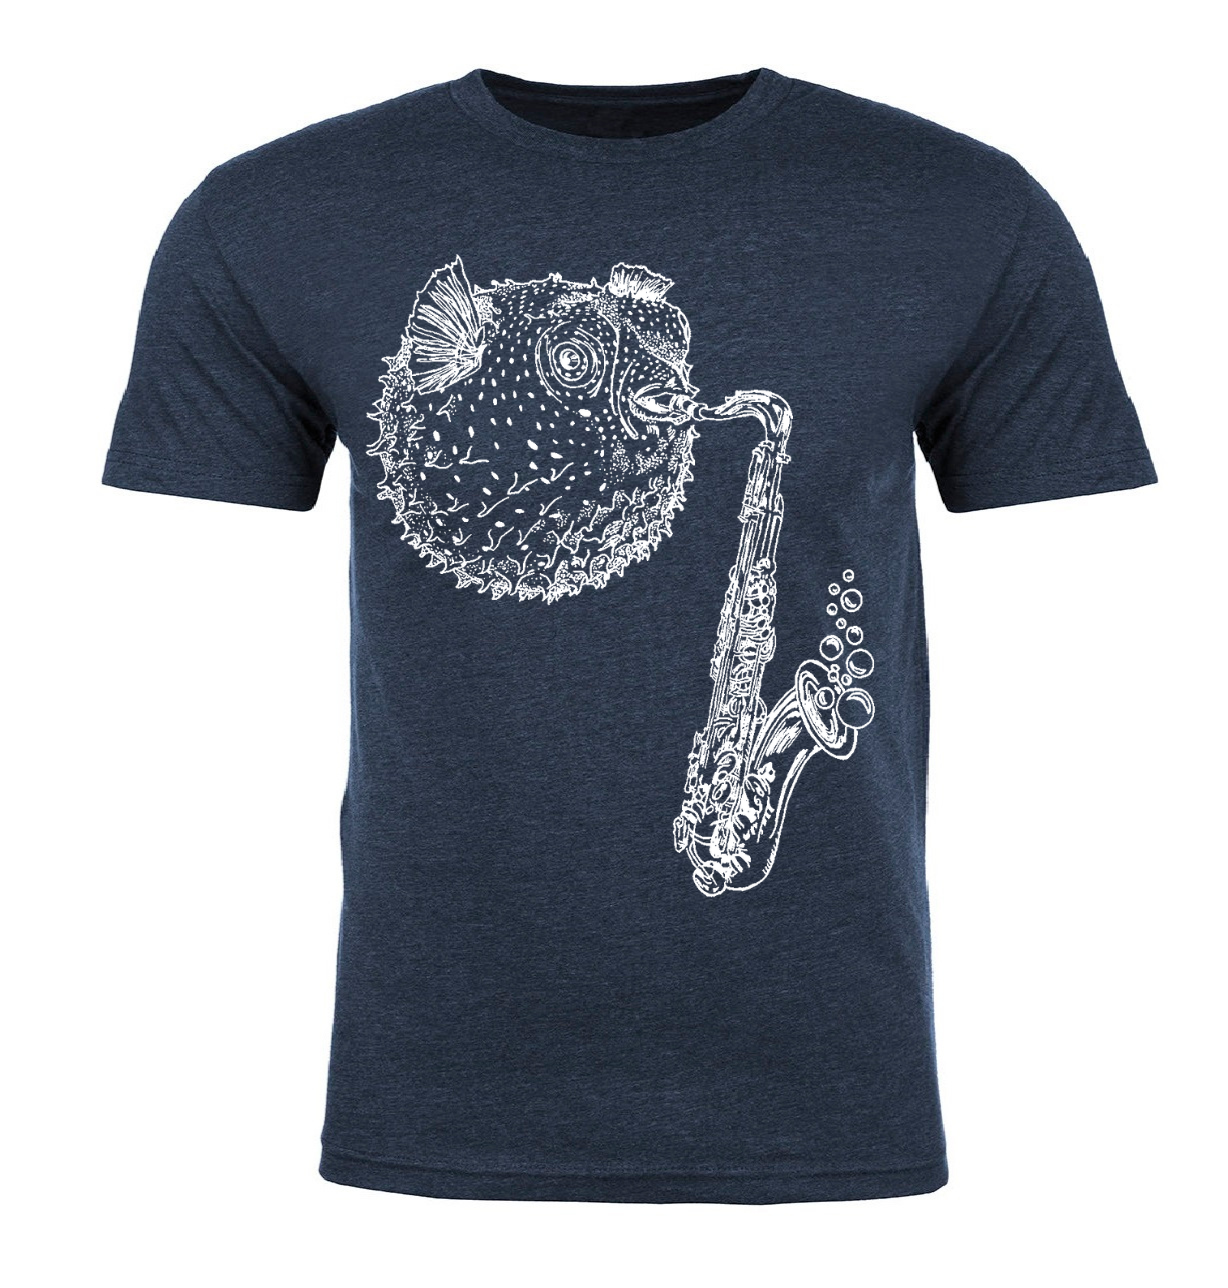 Blowfish Playing Saxophone Unisex T Shirt